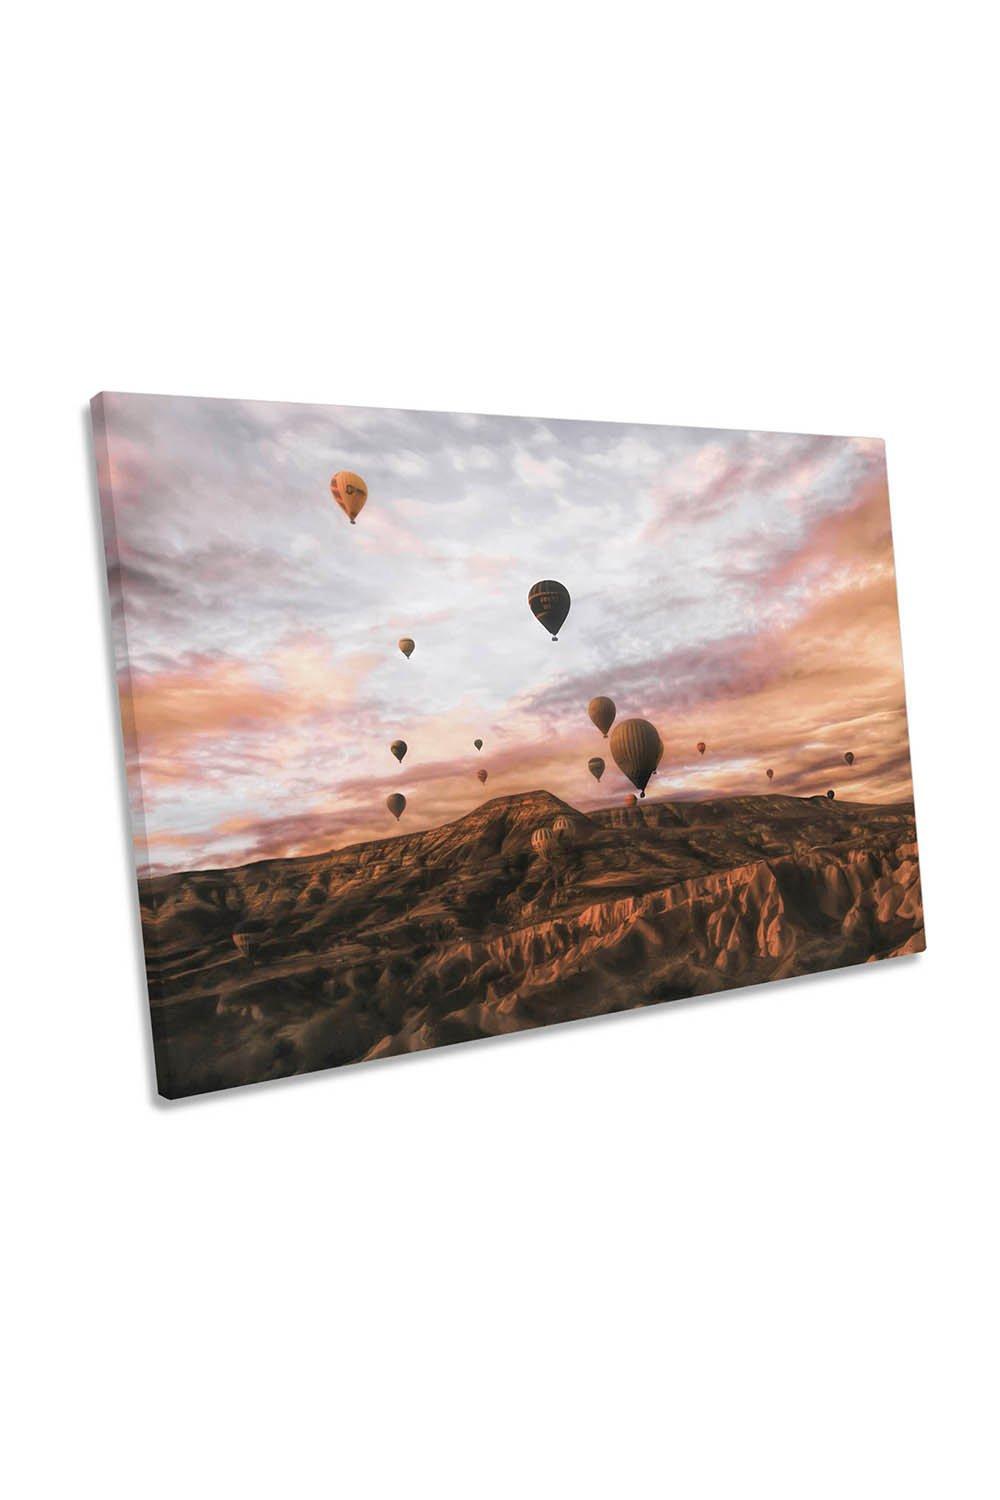 Cappadocia Hot Air Balloons Sunset Canvas Wall Art Picture Print